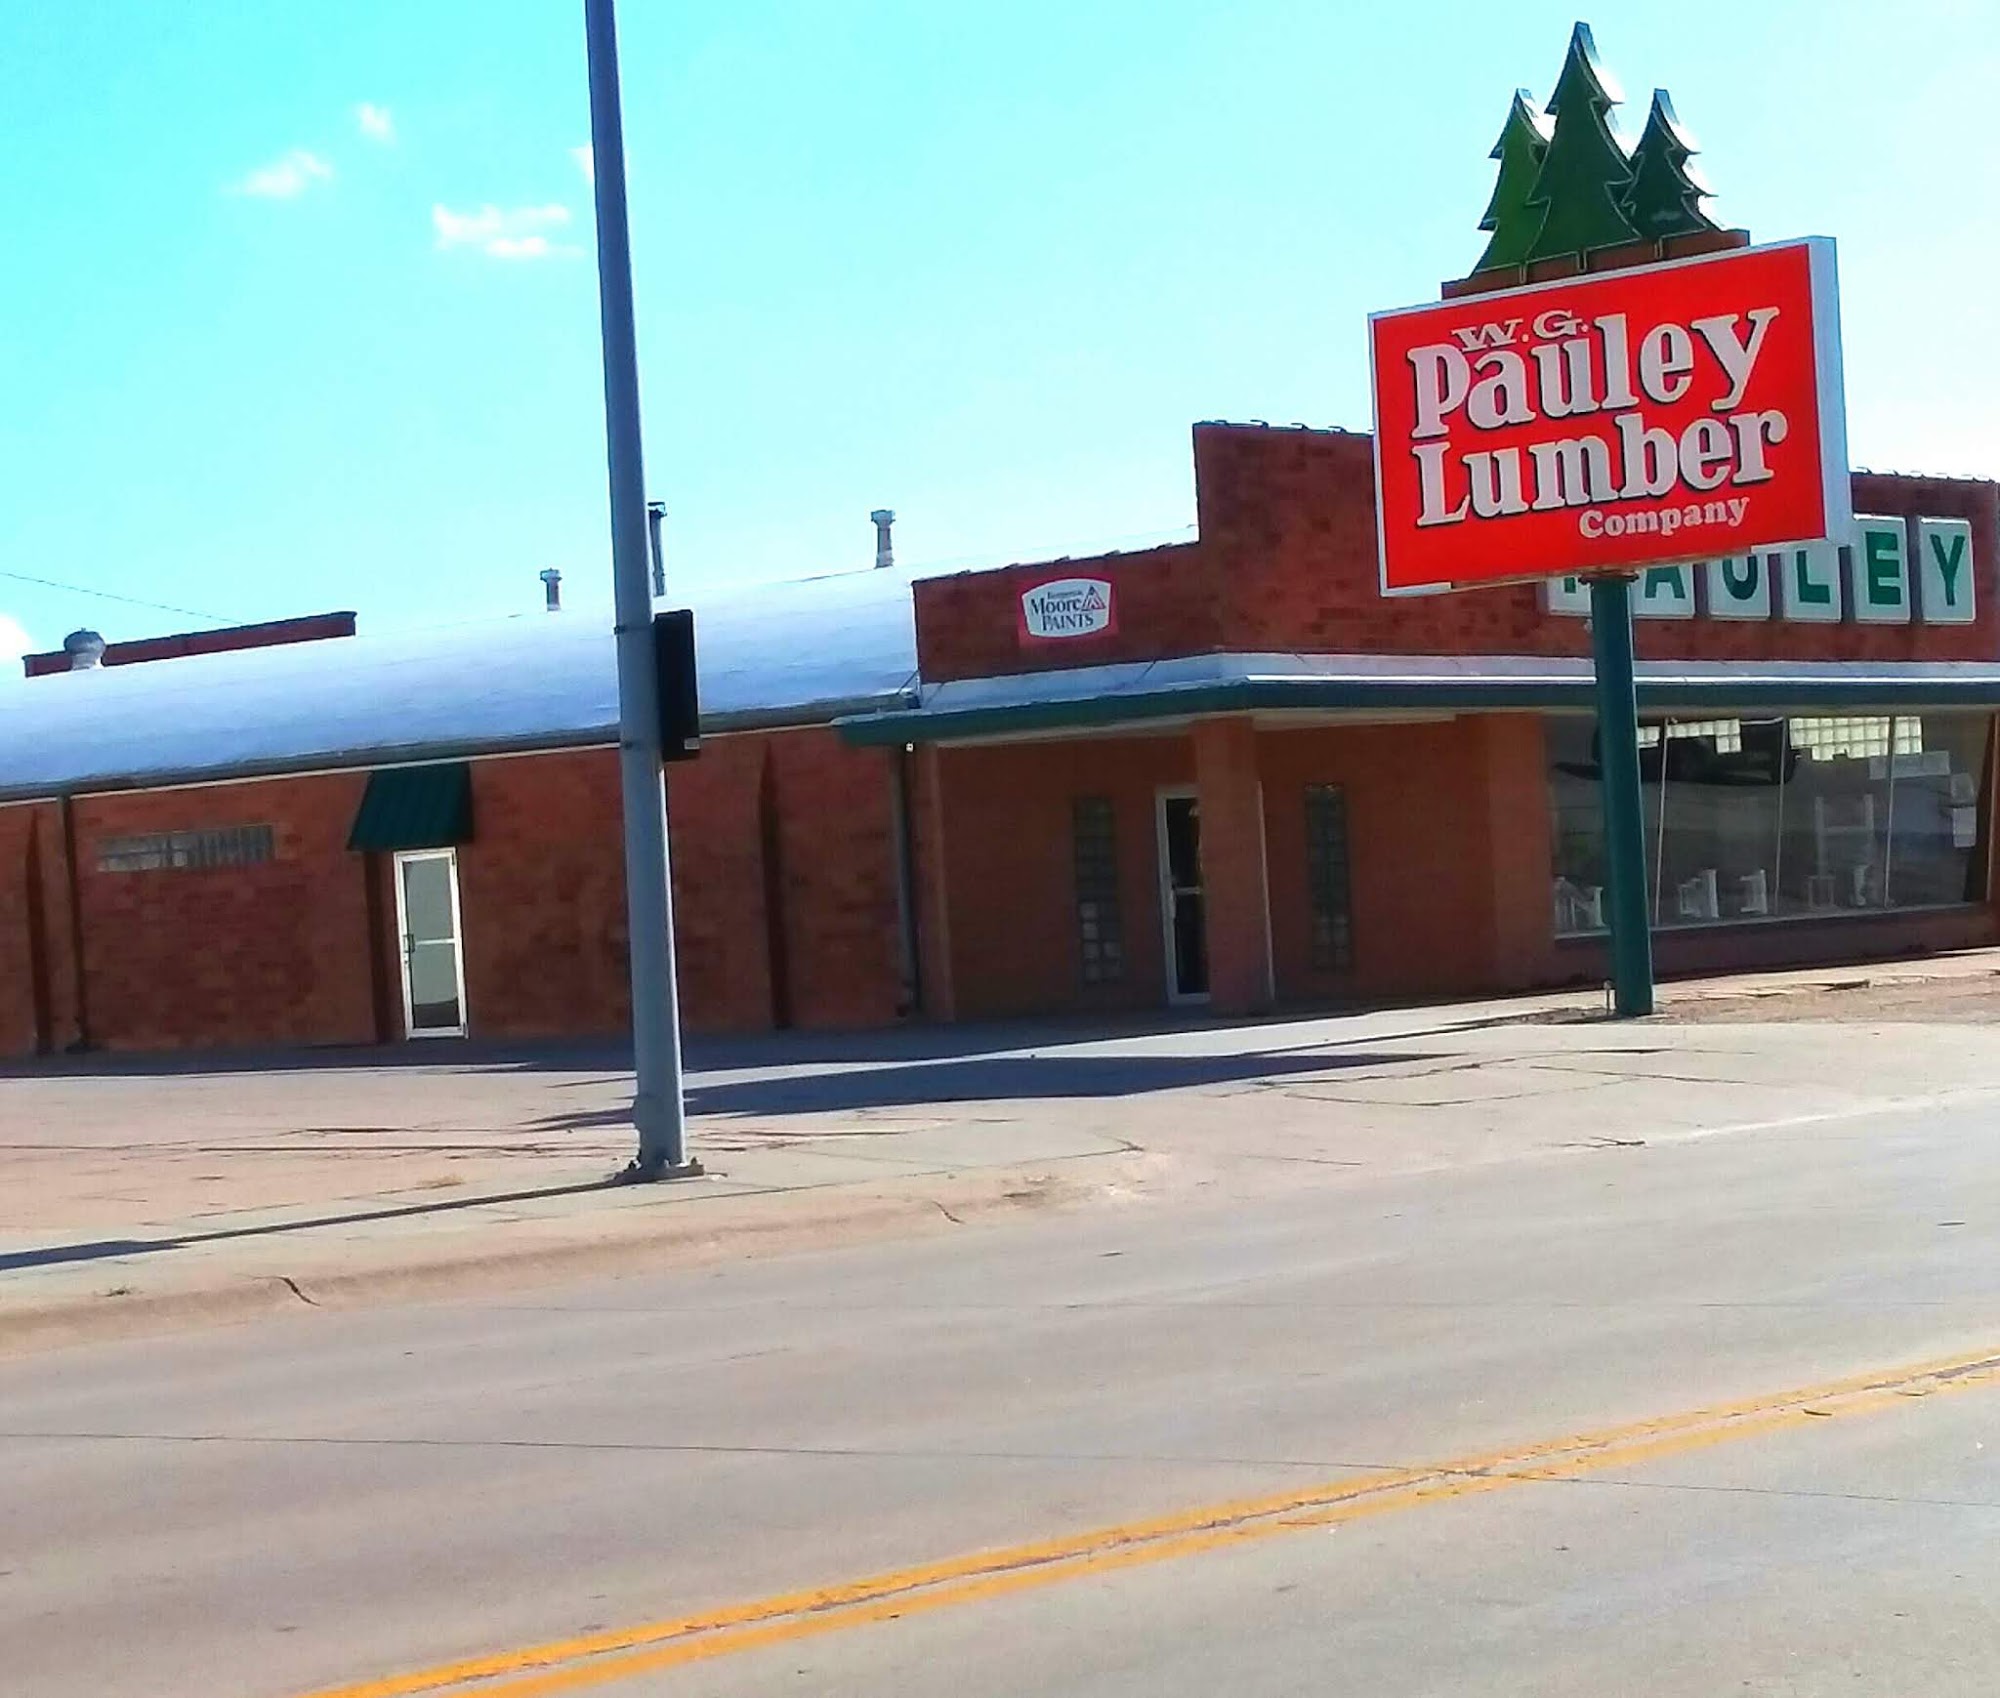 W. G. Pauley Lumber Company